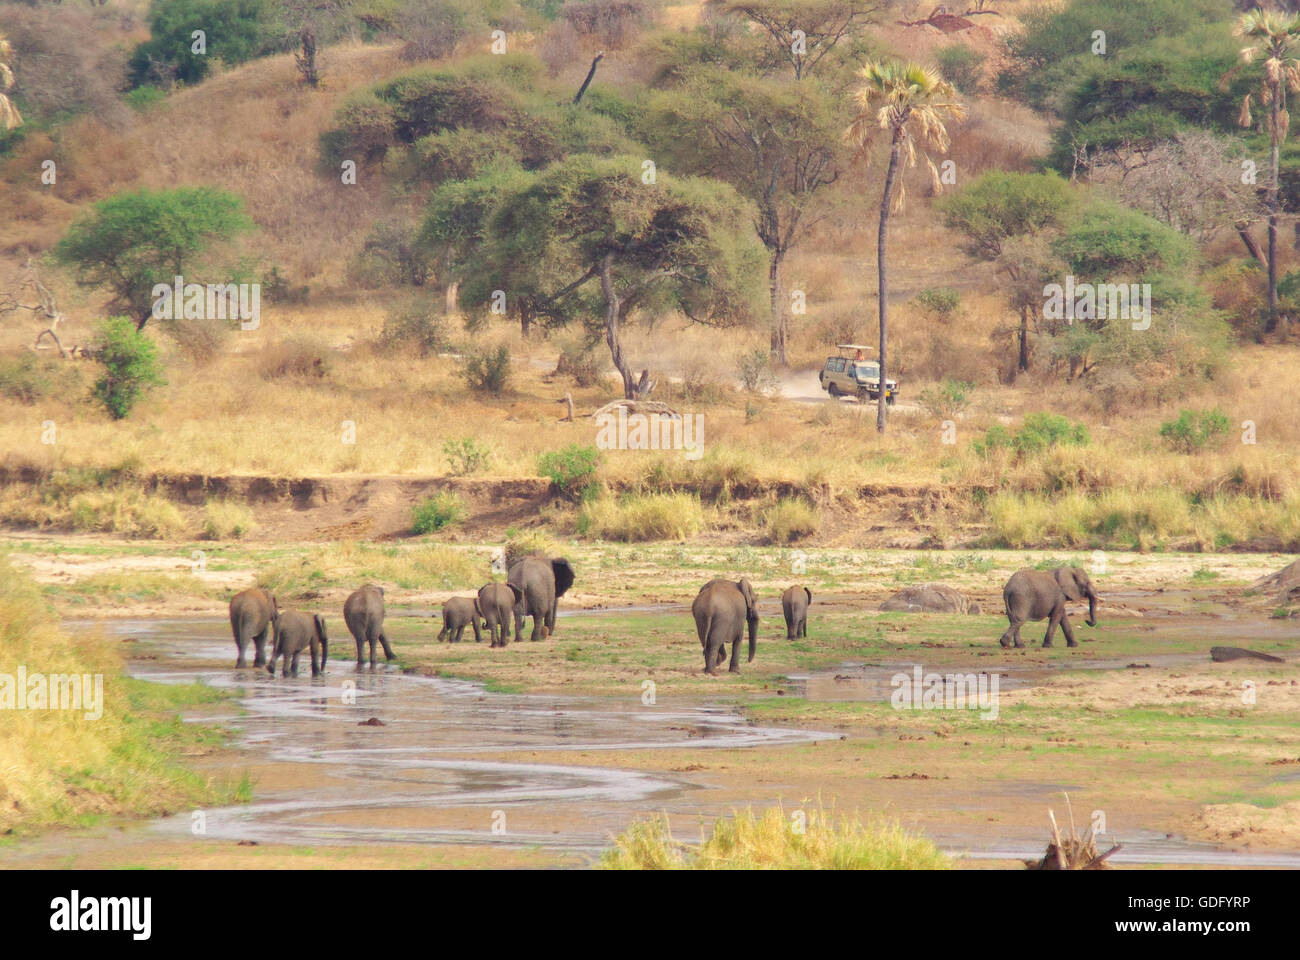 Elephants on the river Stock Photo